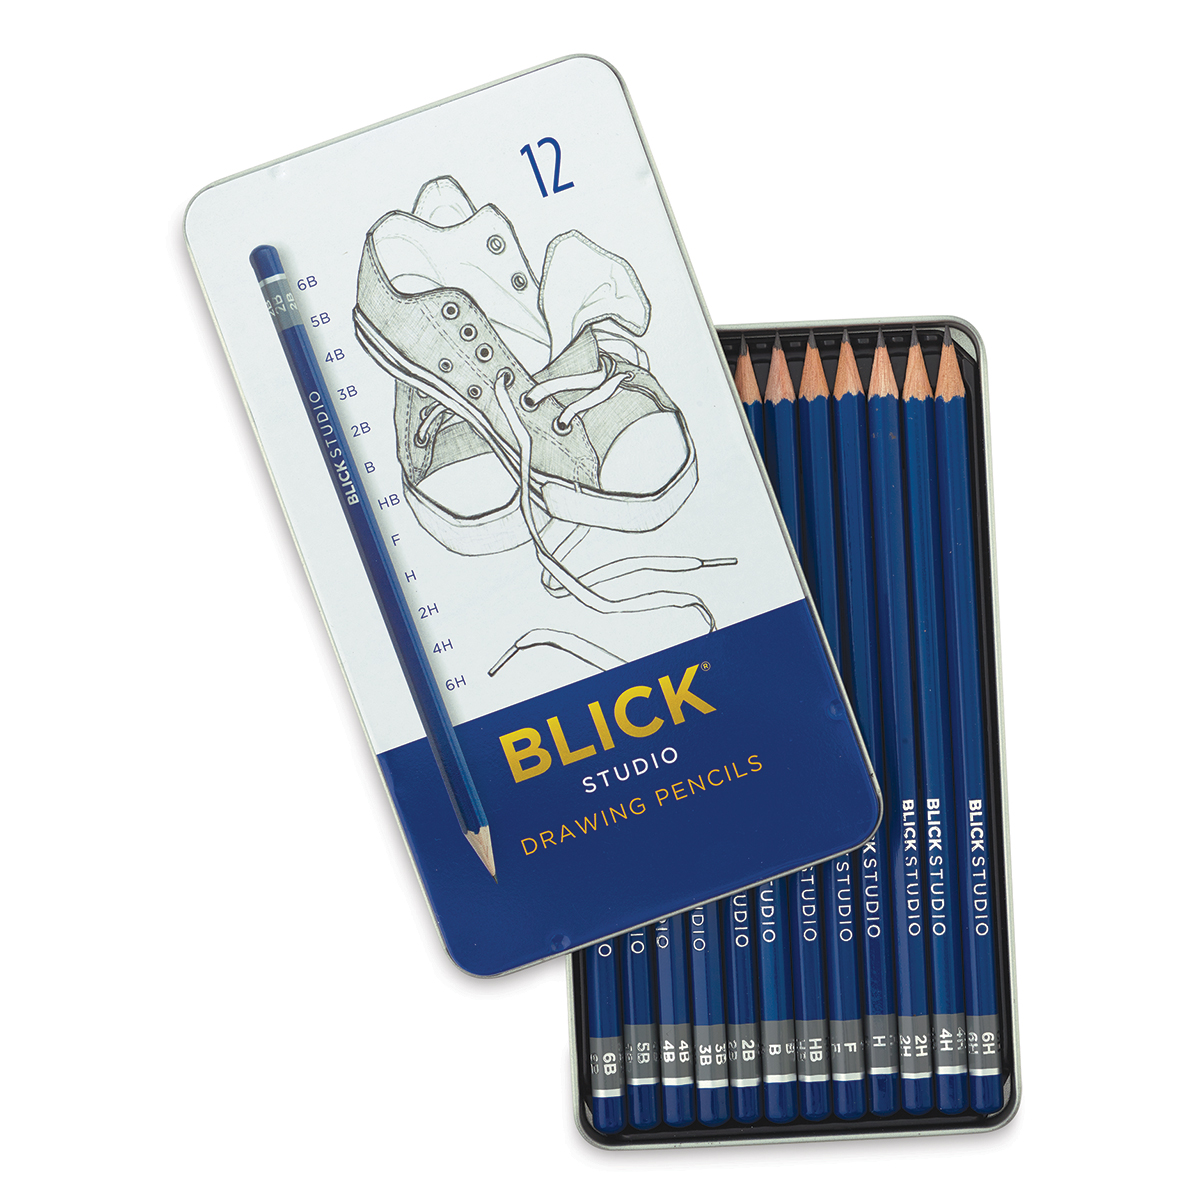 Blick Studio Drawing Pencils - Set of 12